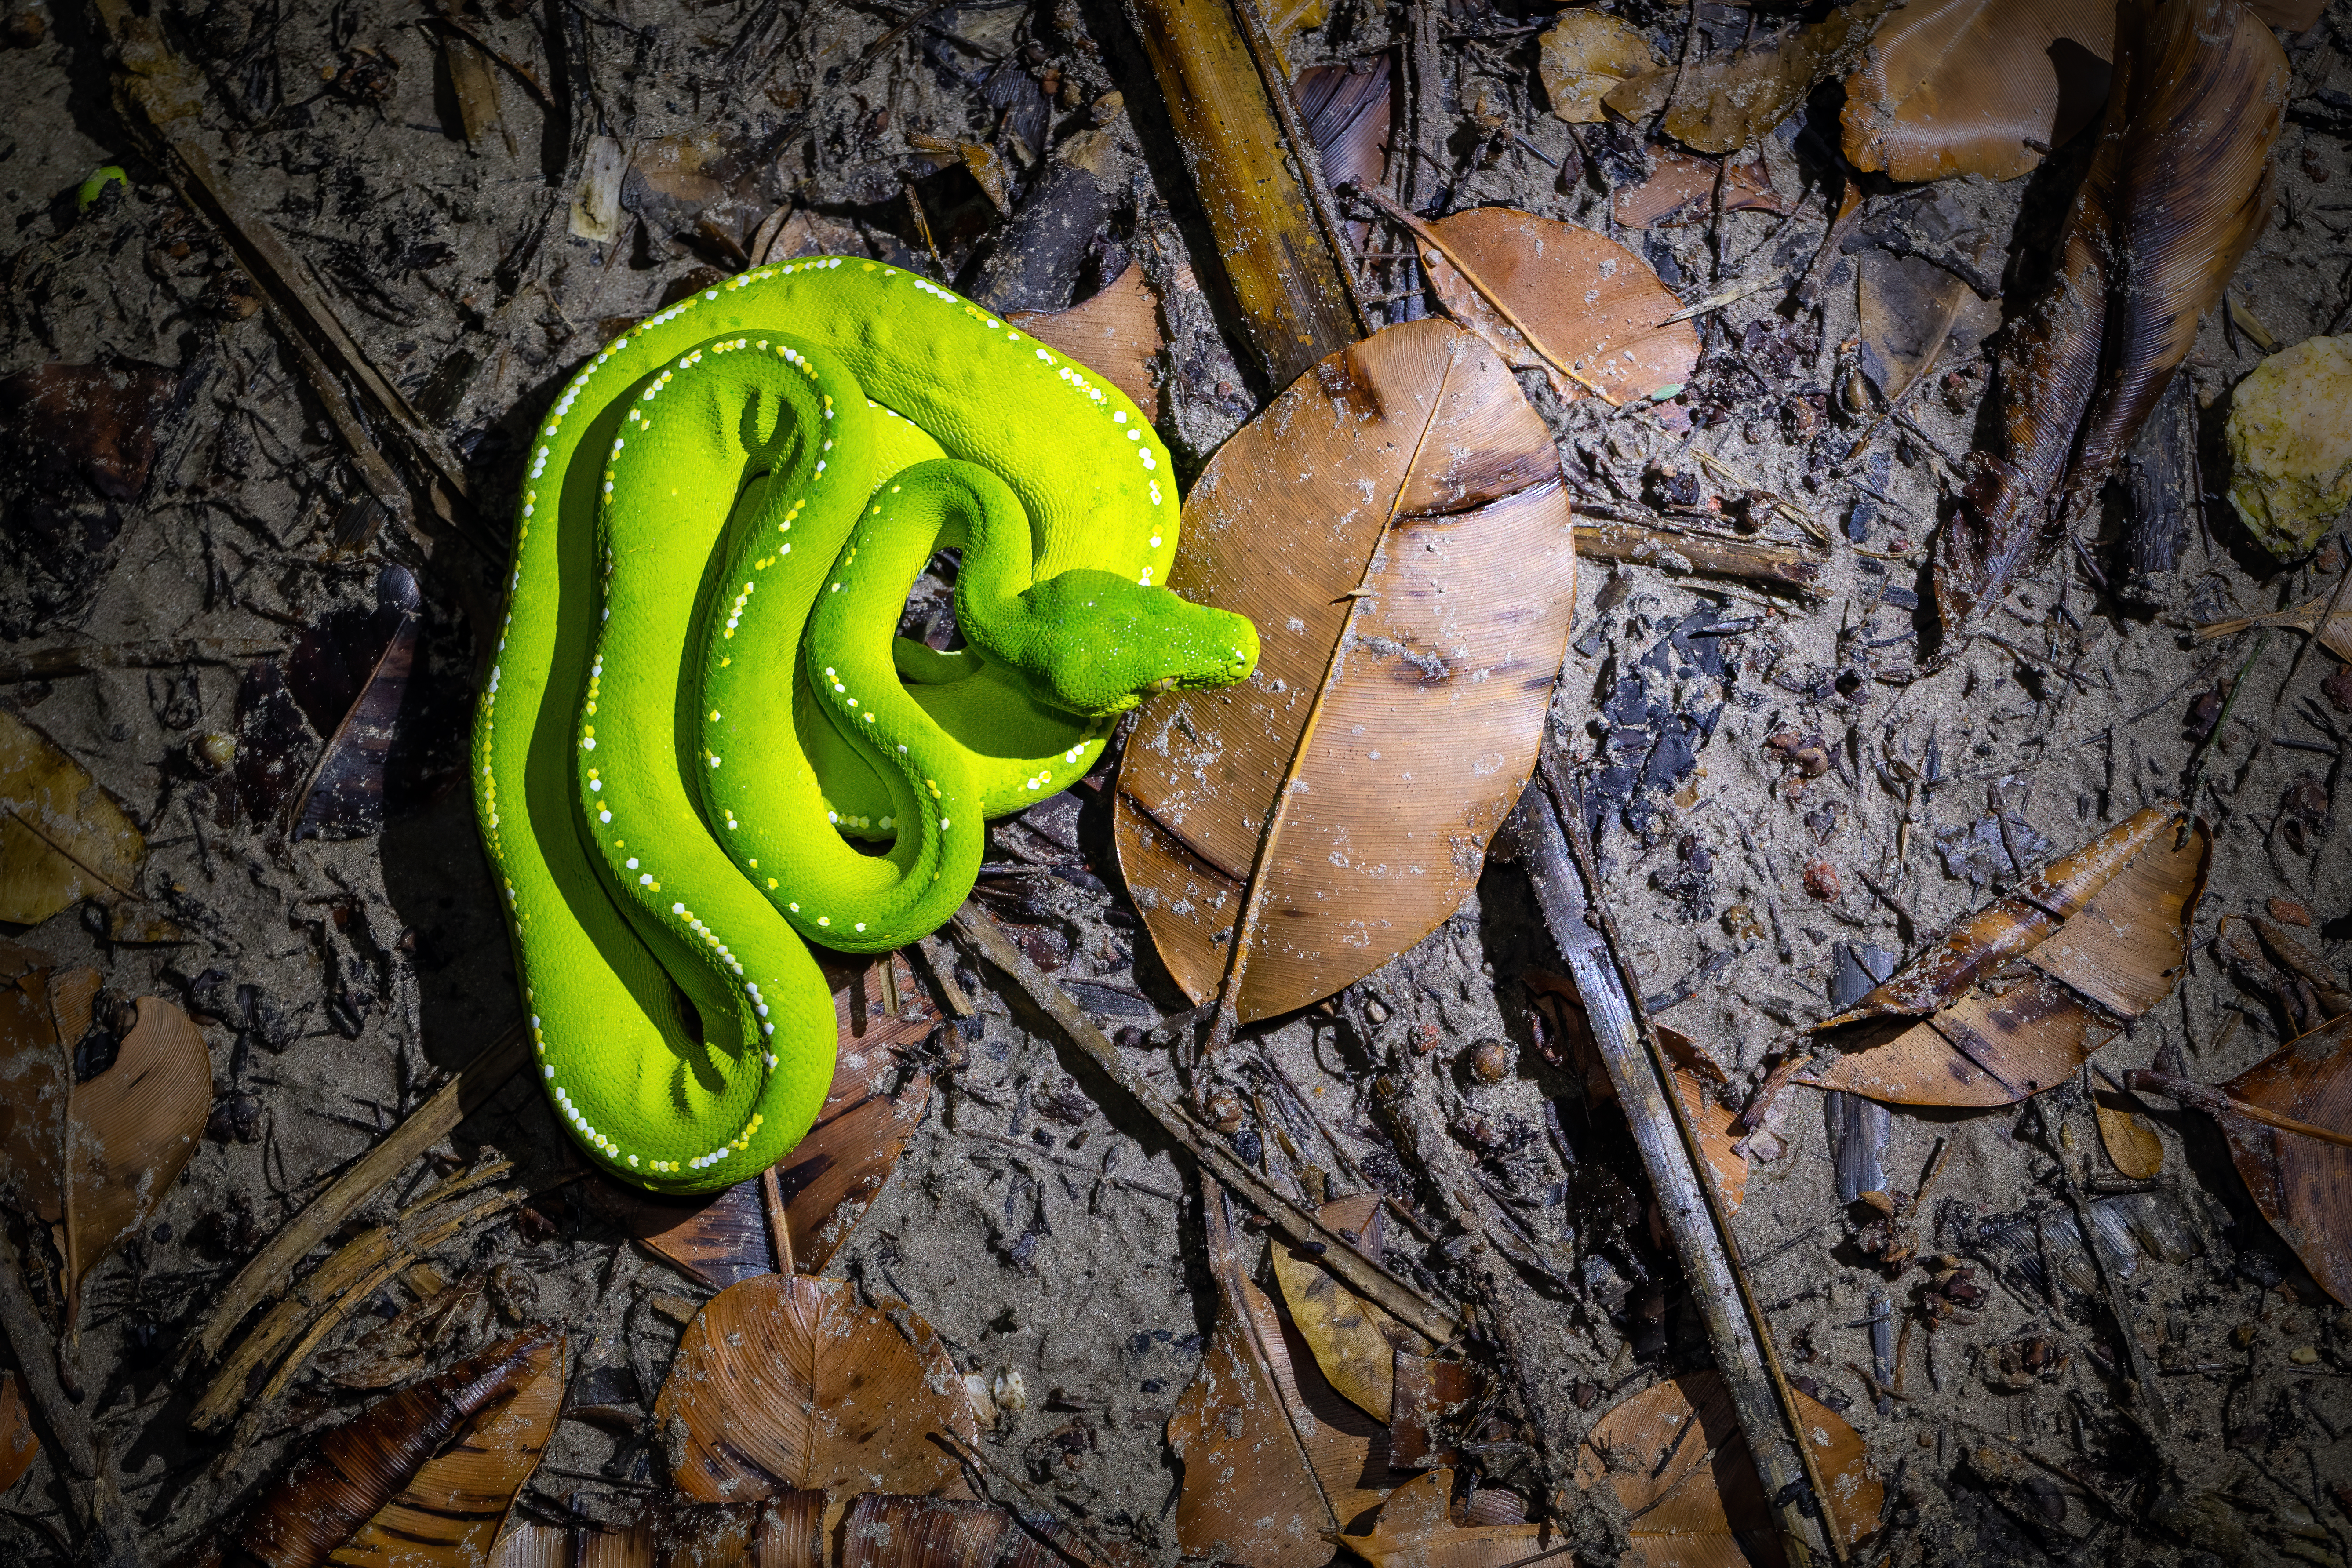 Green tree python (Morelia viridis ssp. shireenae) - Lockhart, Queensland, Australia by JJ Harrison